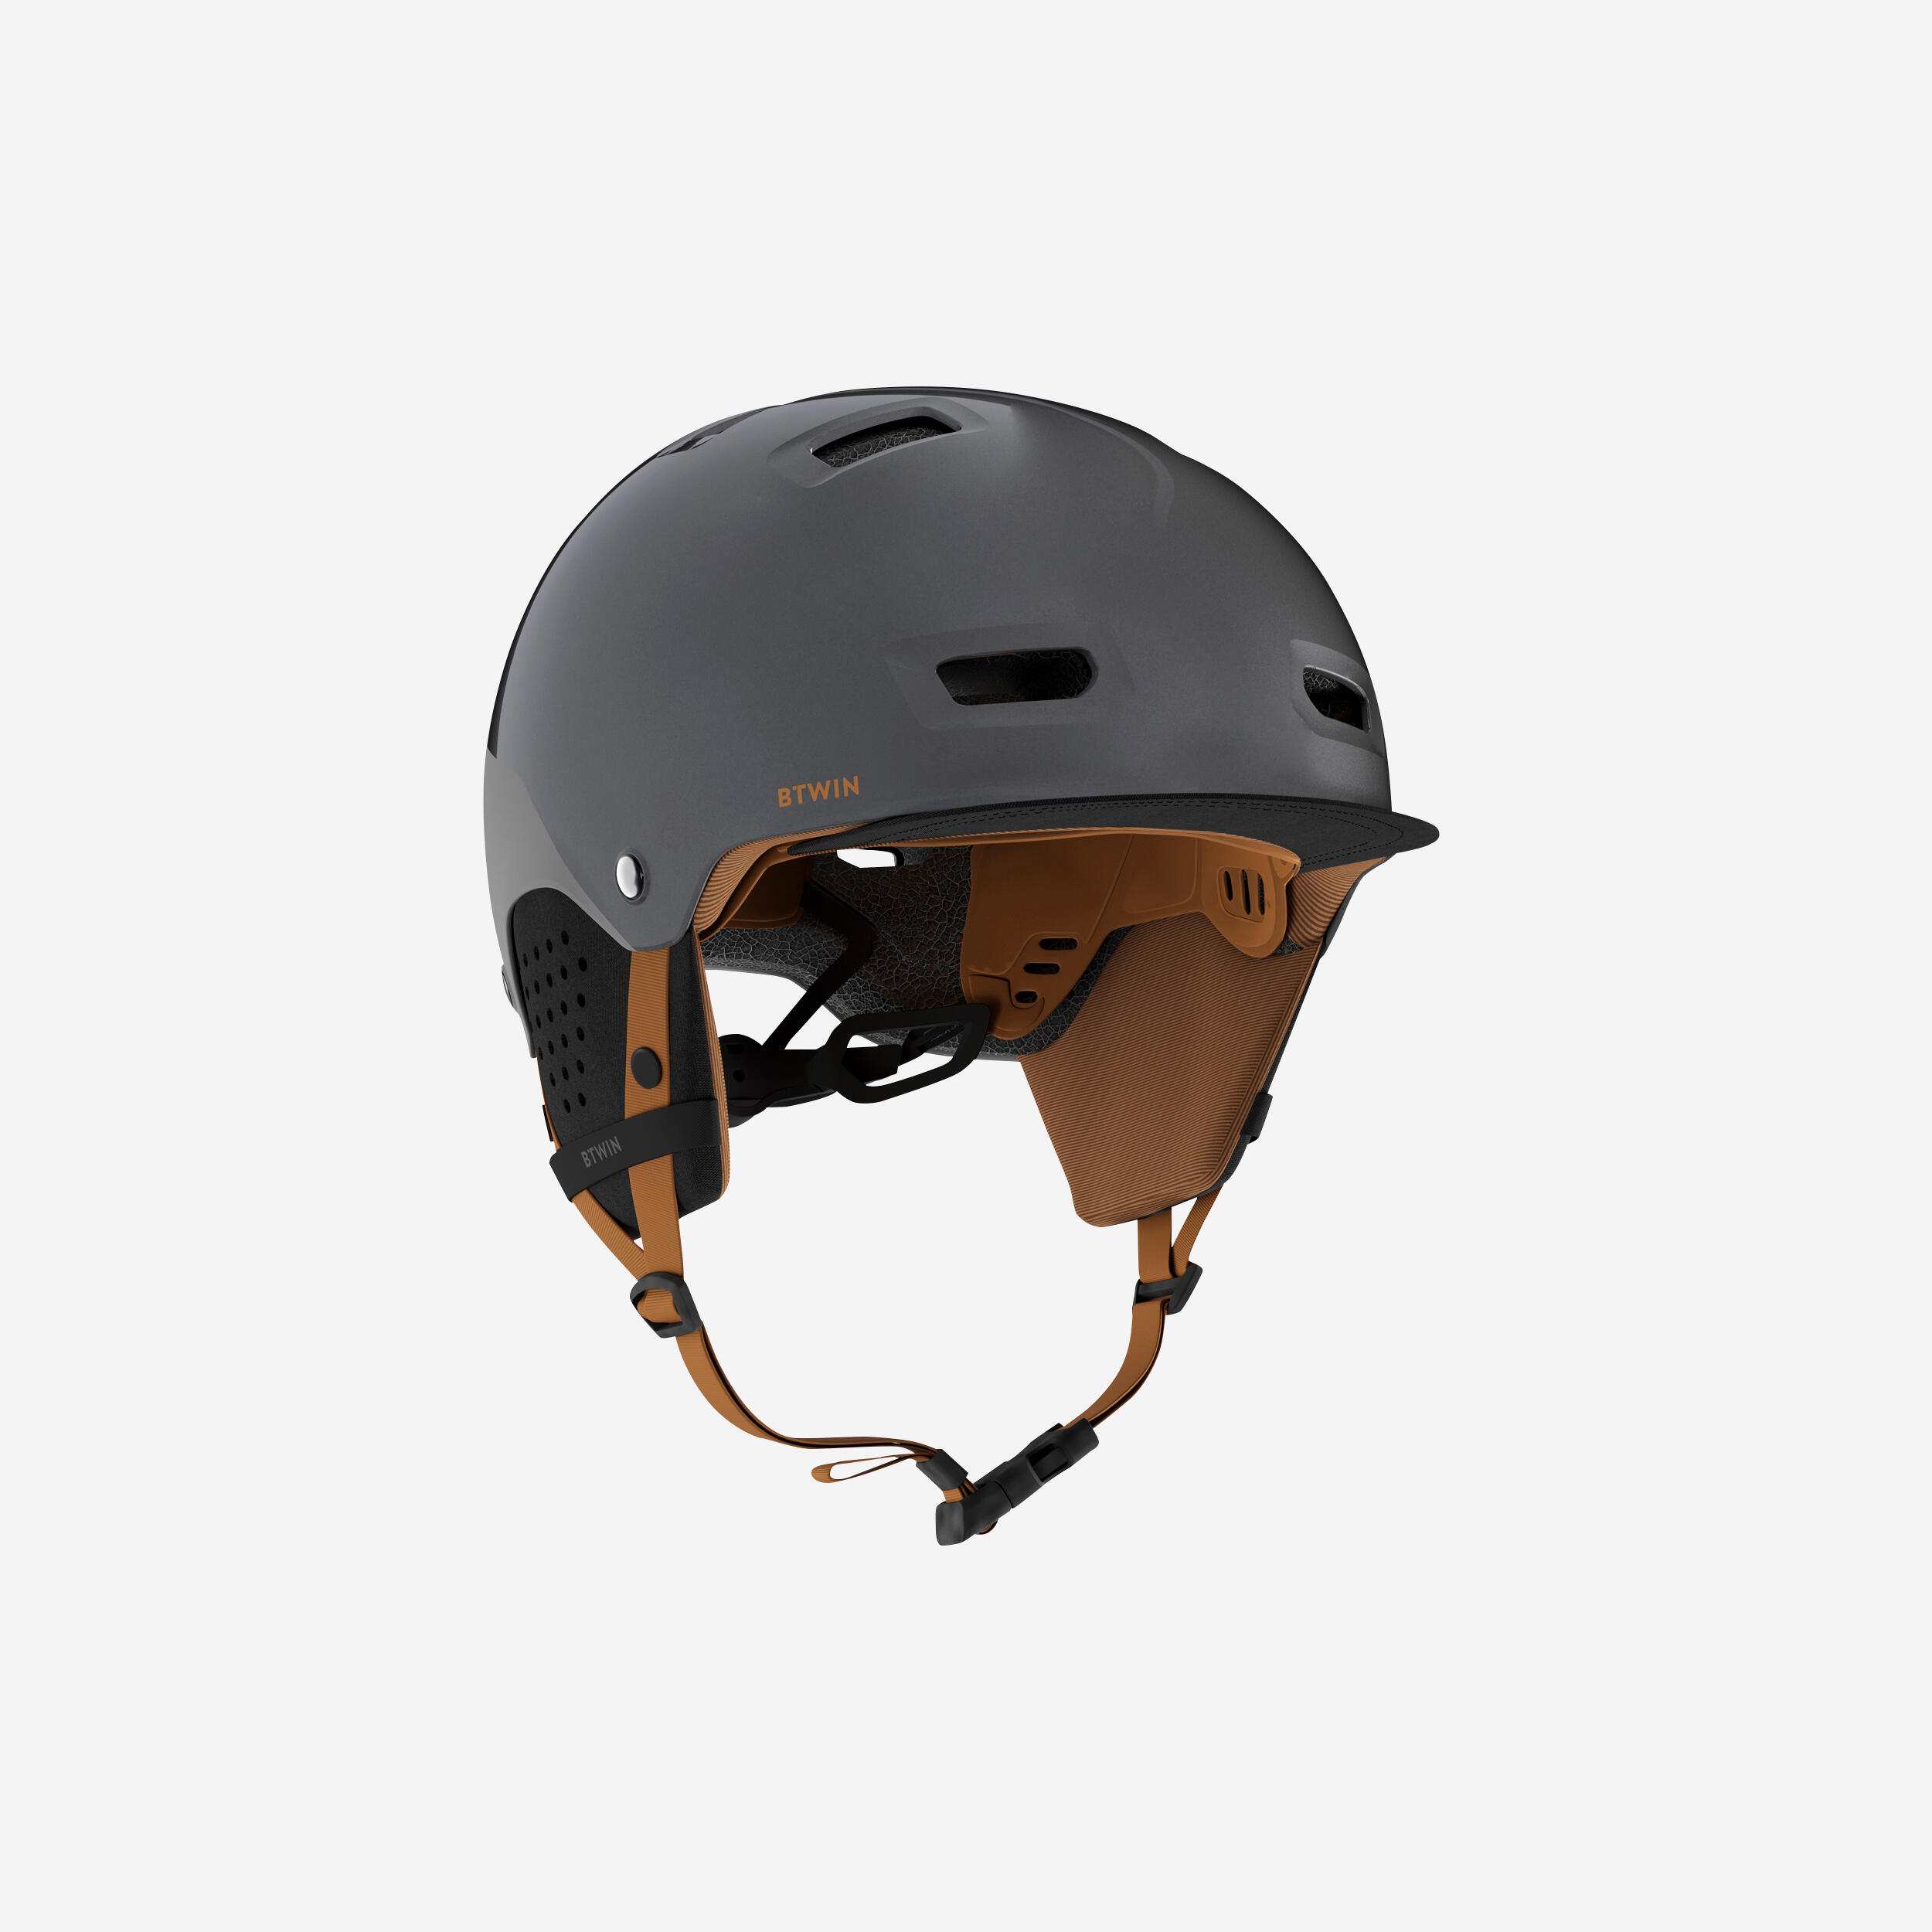 BTWIN City Cycling Bowl Helmet 540 - Satin Grey/Black